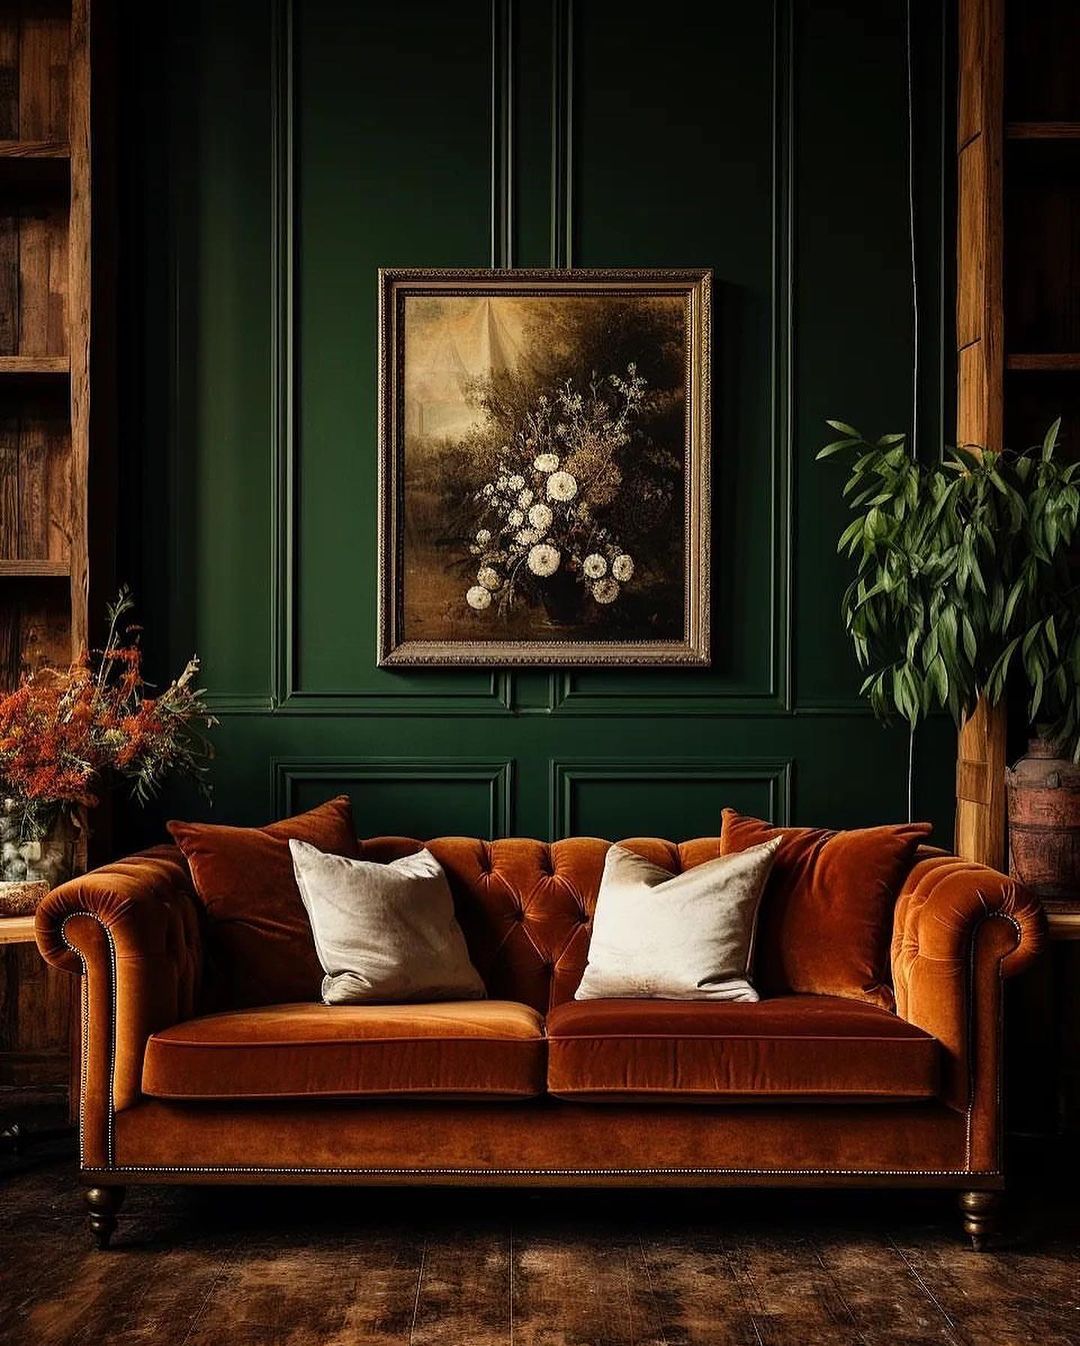 Furnishing your living room: designer
sofas